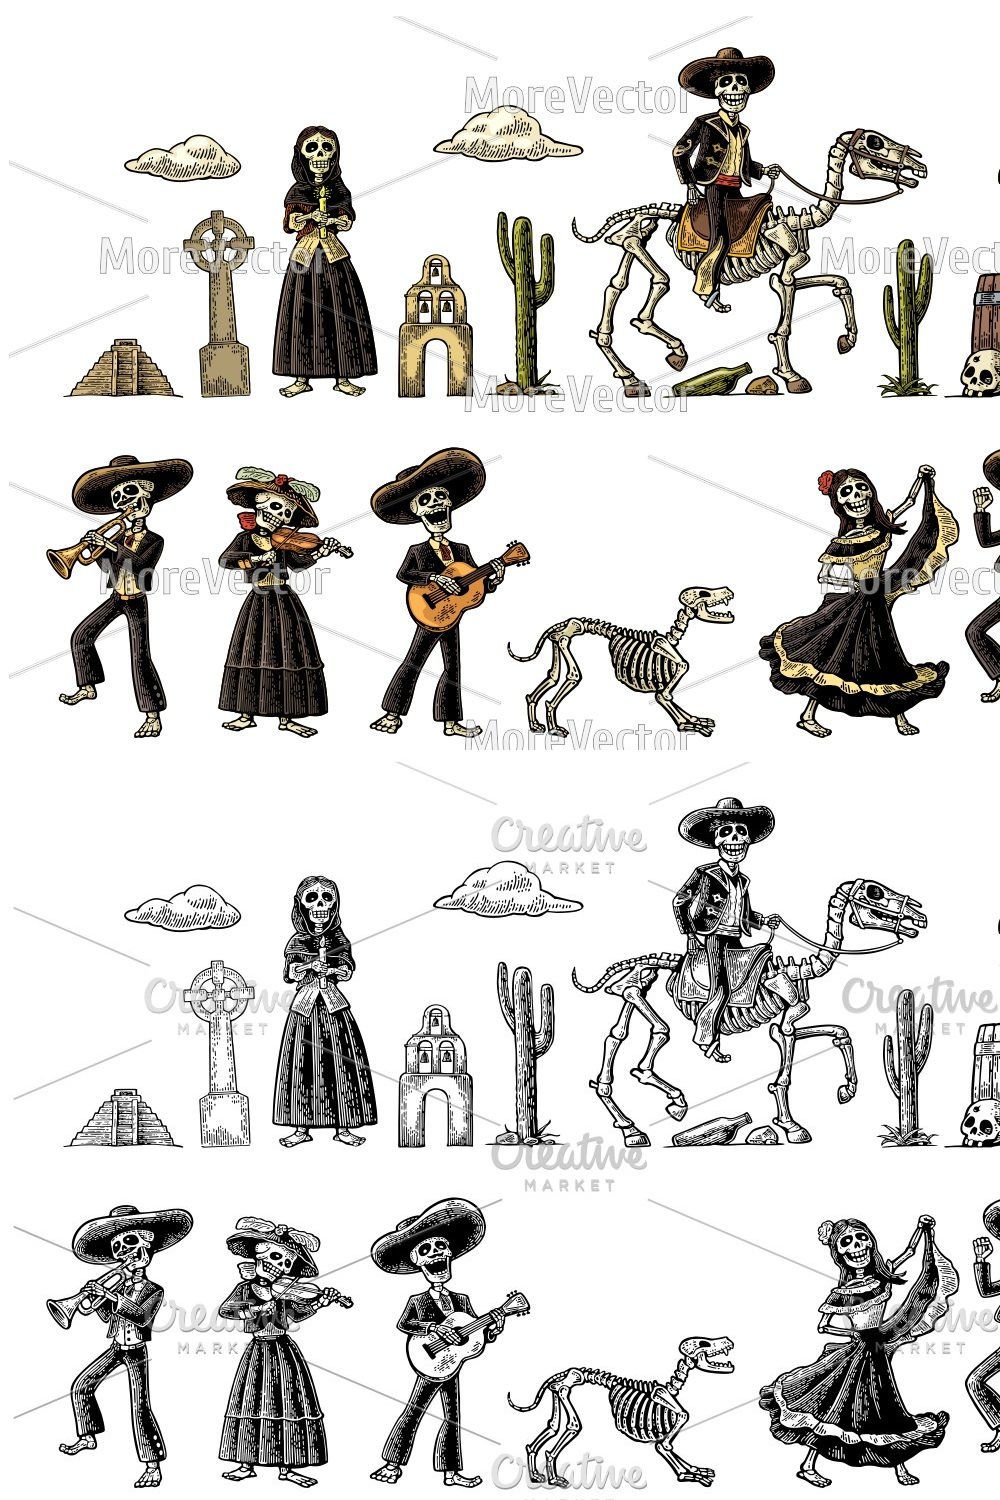 Dia de los Muertos skeleton  Mexico pinterest preview image.